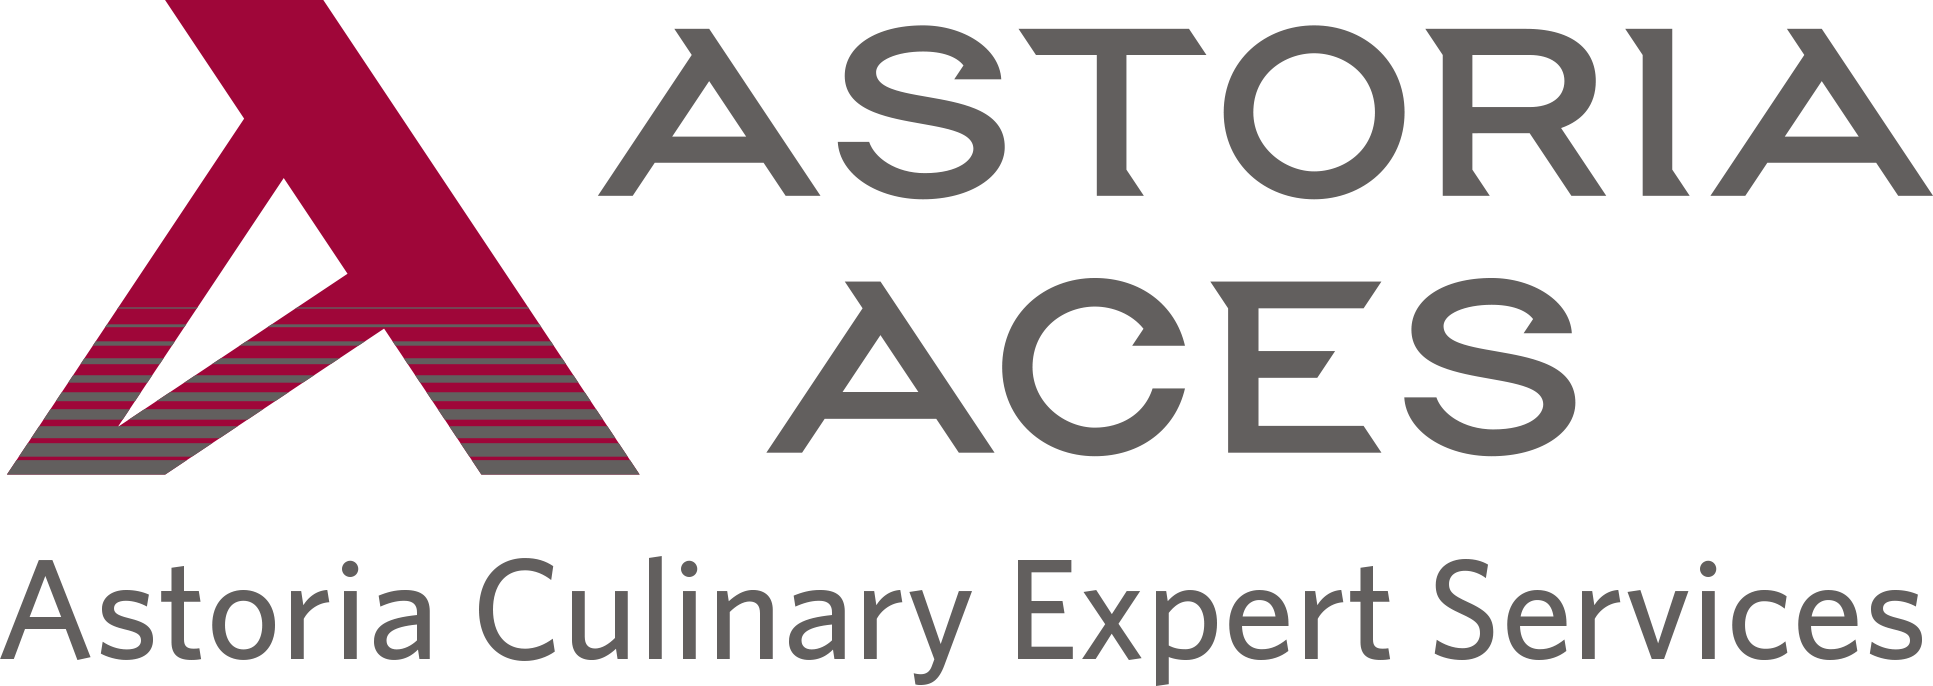 Astoria Culinary Expert Services